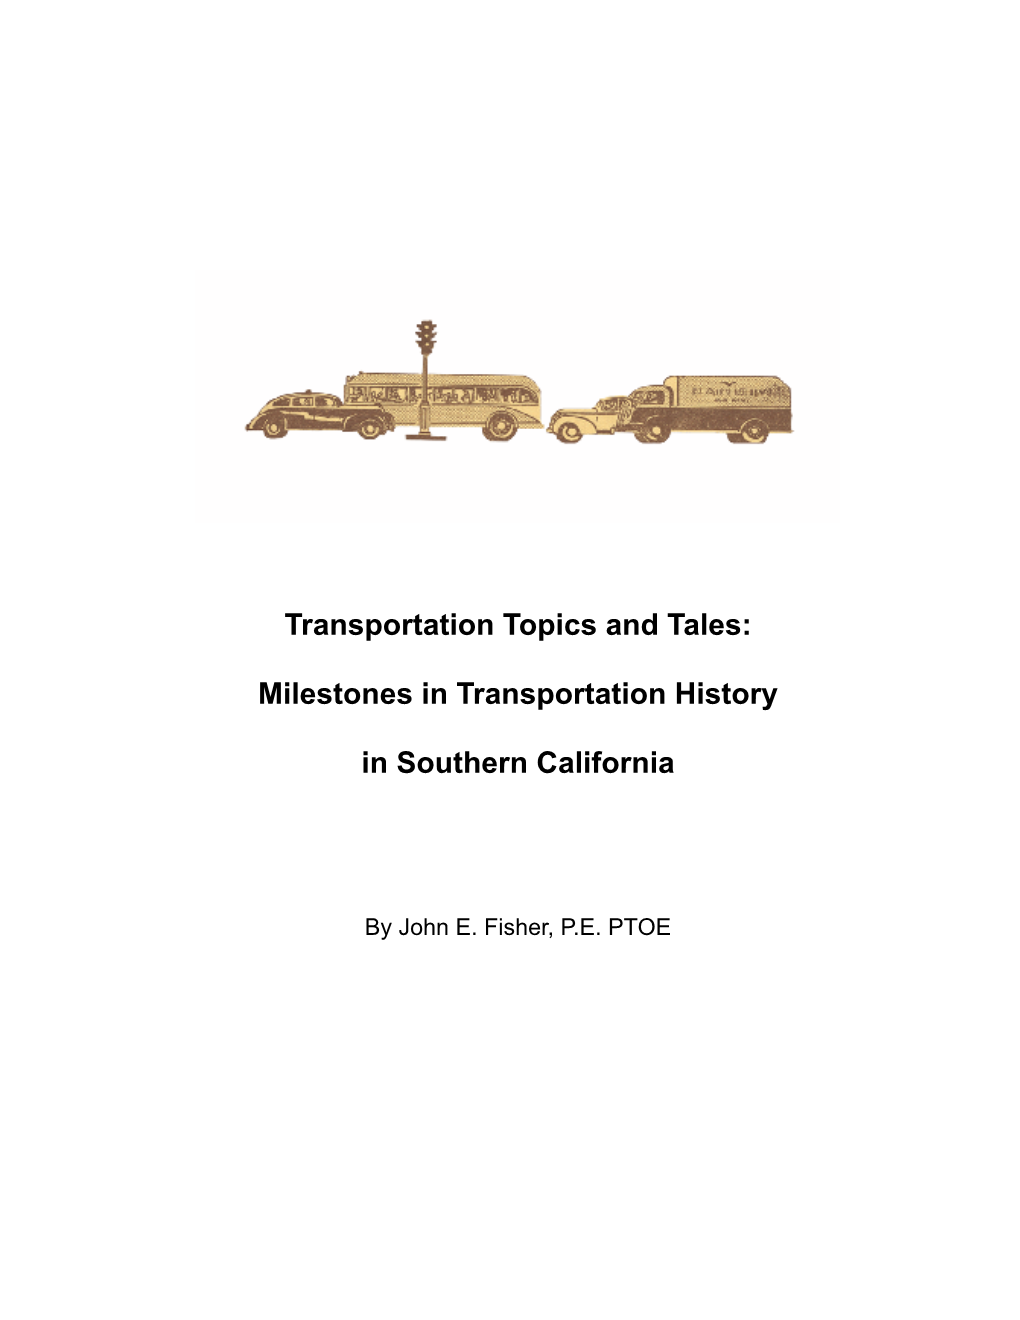 Milestones in Transportation History in Southern California